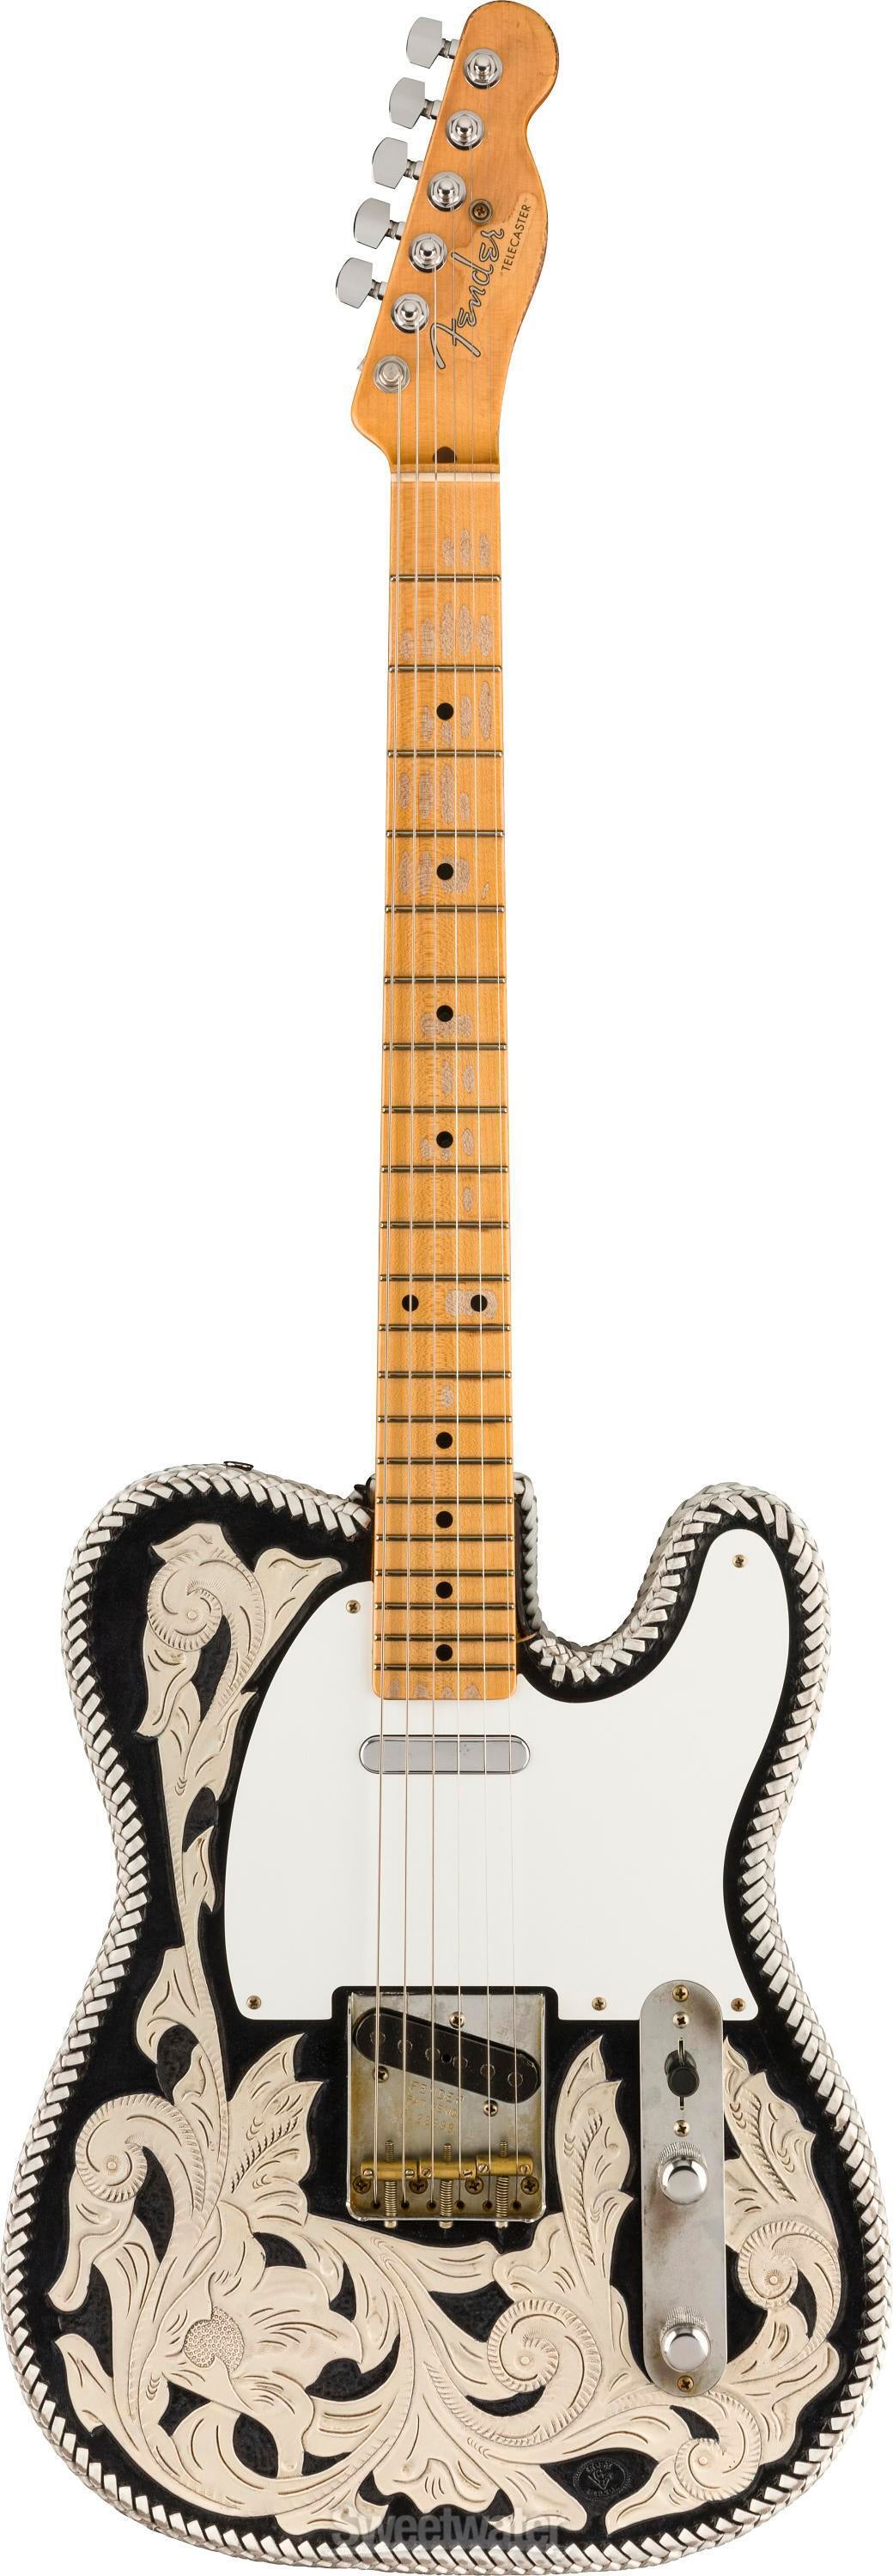 Custom-made waylon Style Leather Guitar Strap 